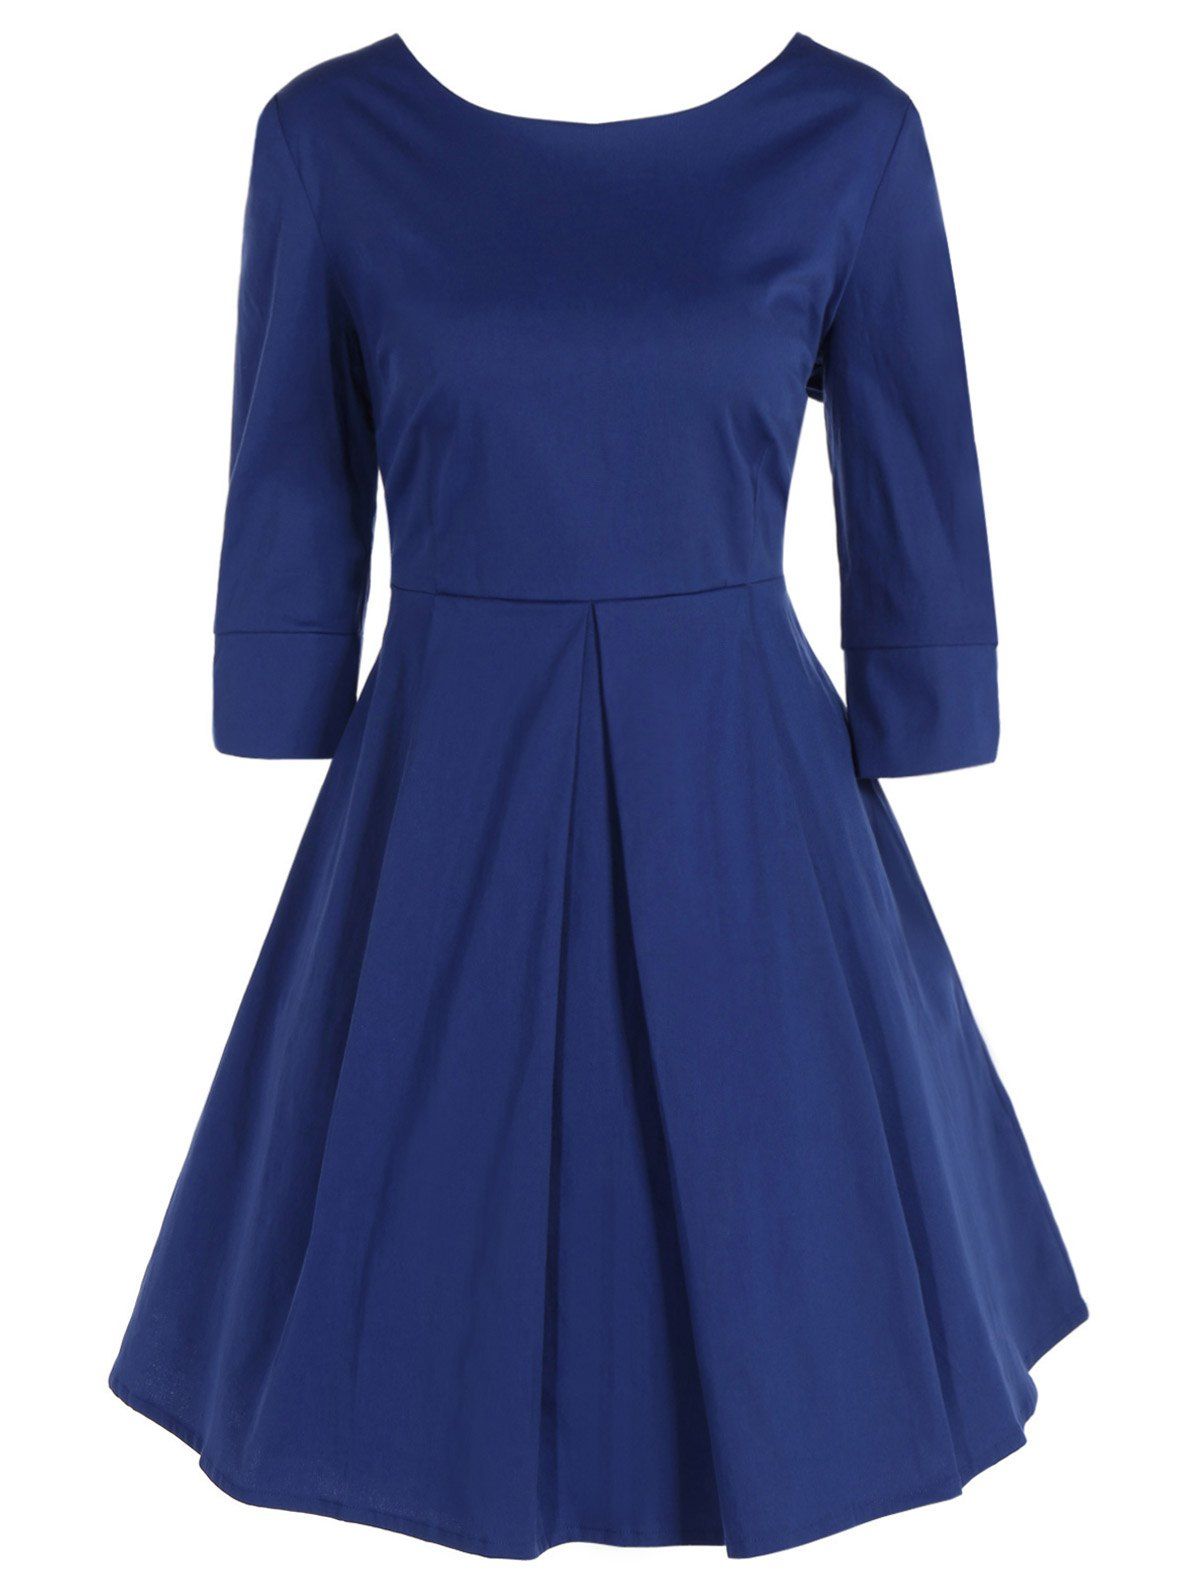 [17% OFF] 2021 Bowknot High Waist Vintage Dress In BLUE | DressLily